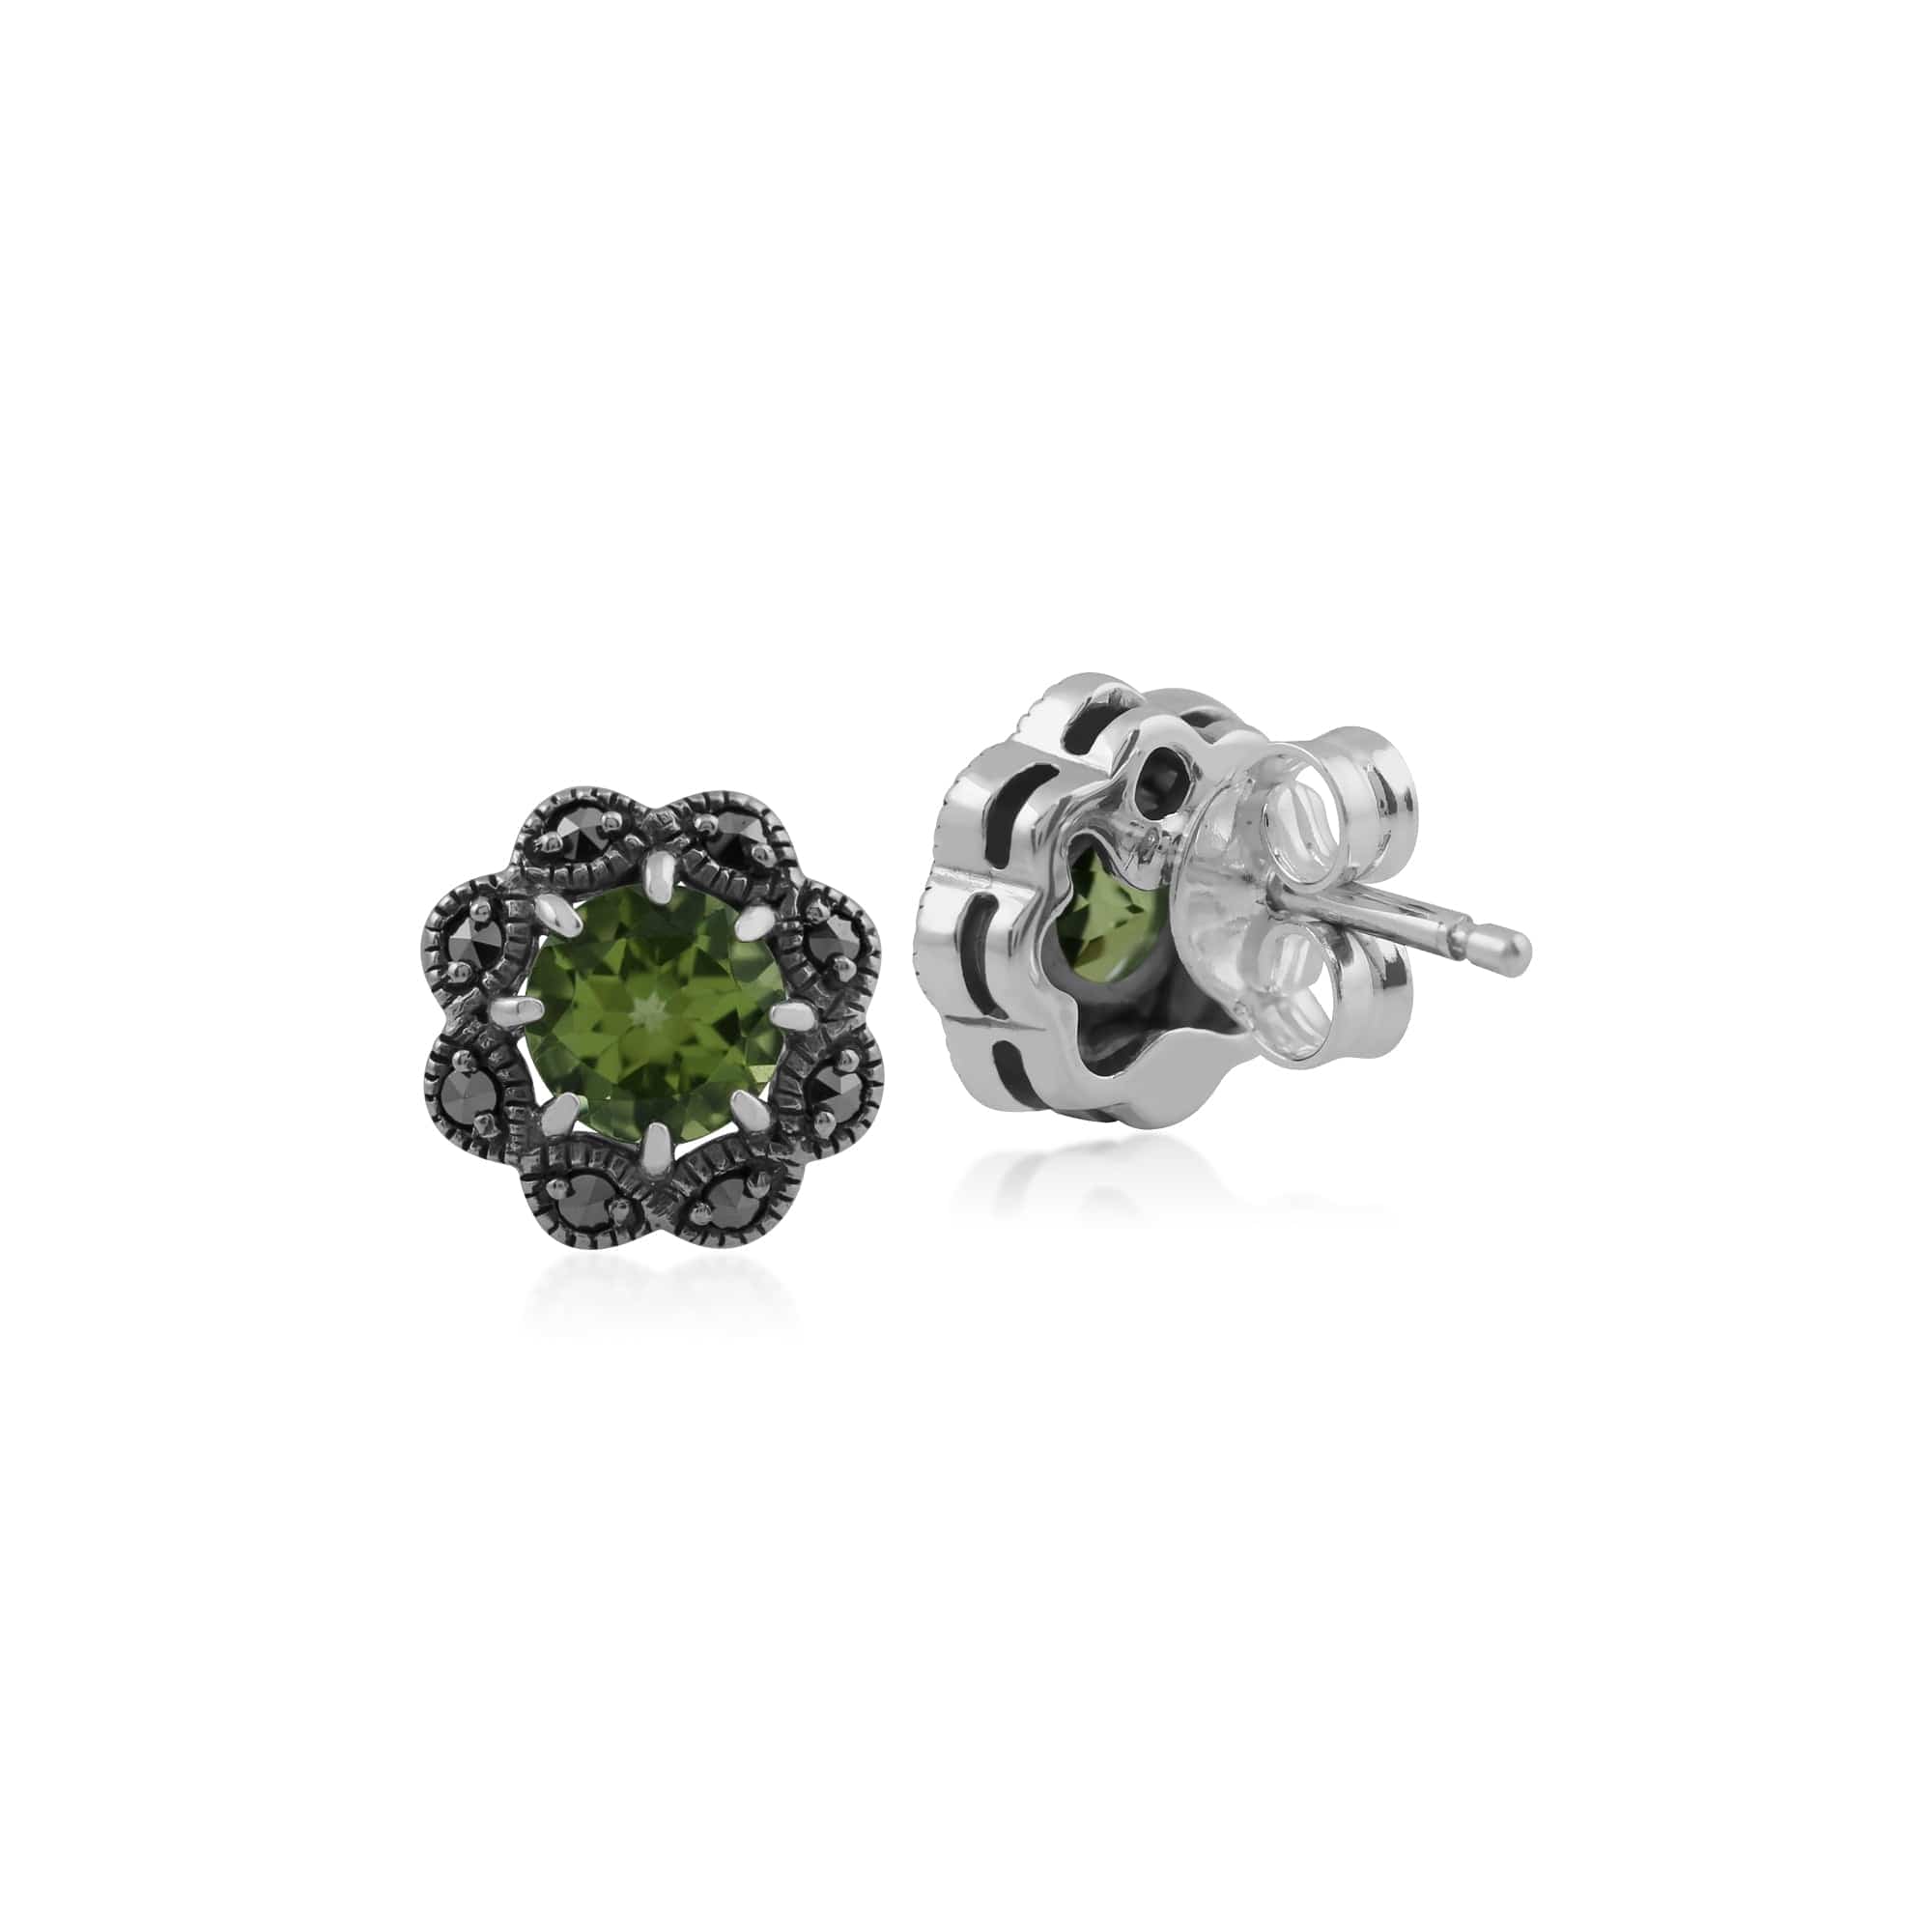 Floral Round Peridot & Marcasite Cluster Stud Earrings in 925 Sterling Silver - Gemondo